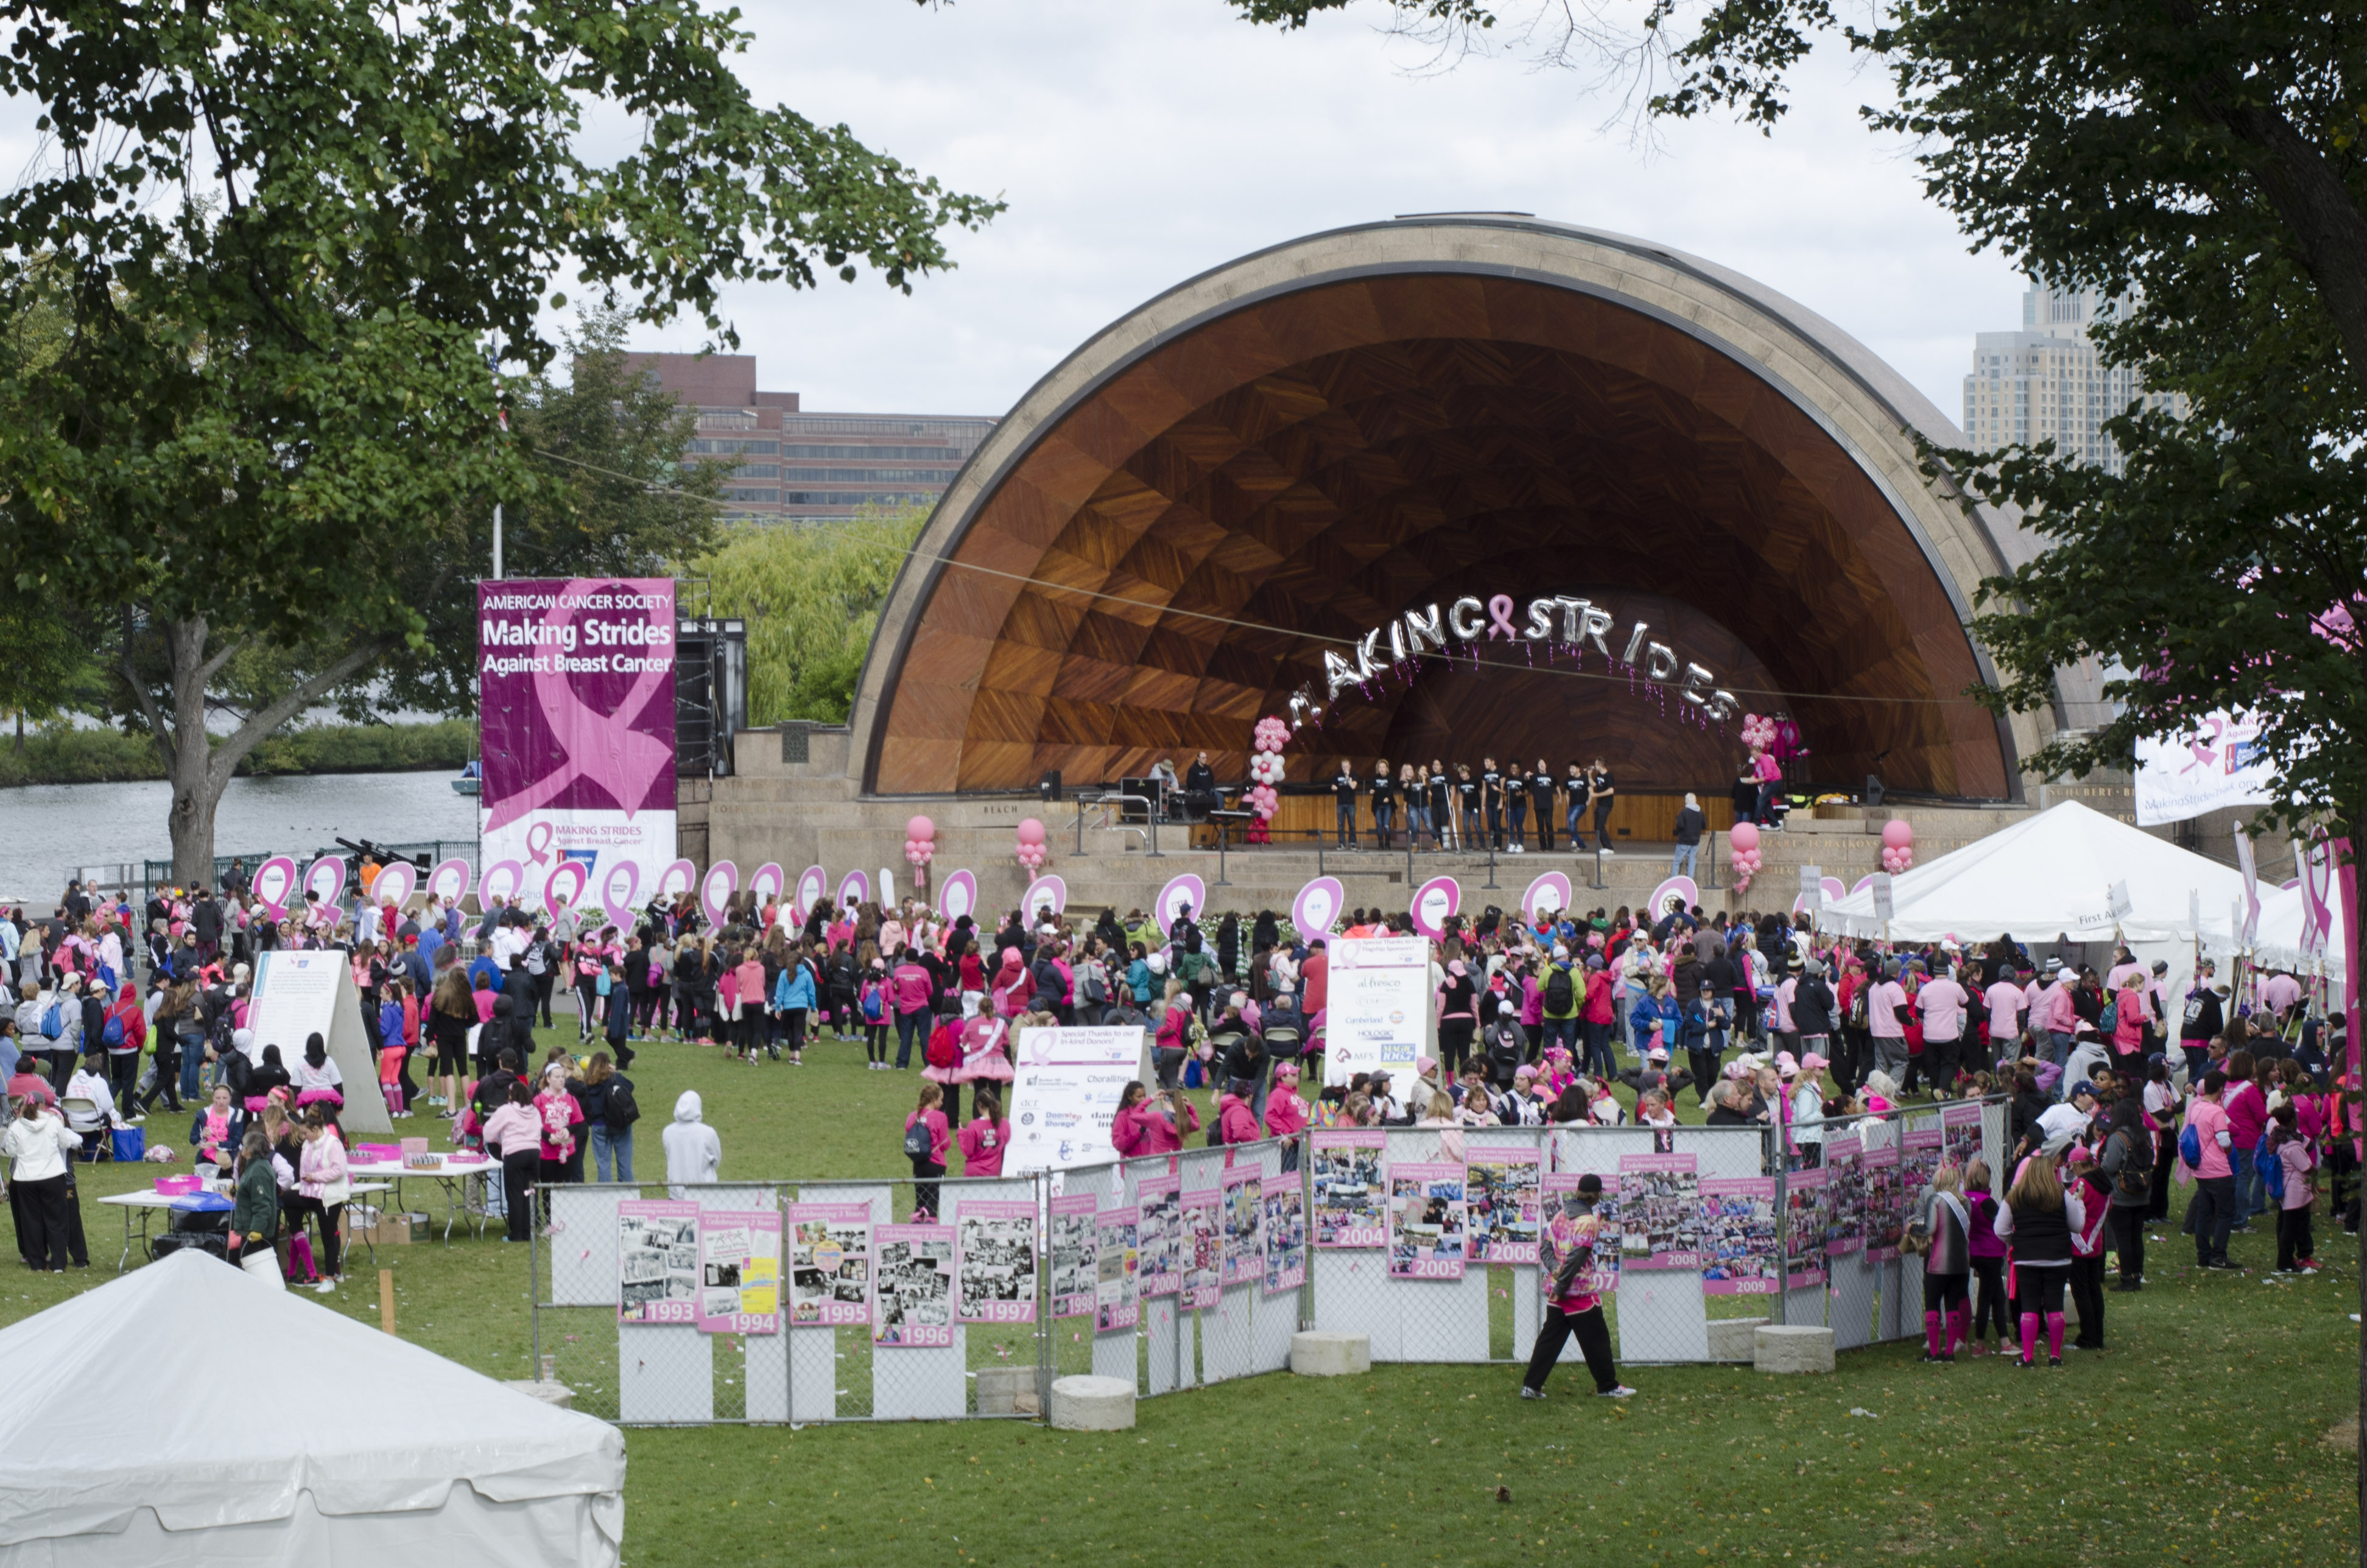 strides breast cancer against making boston